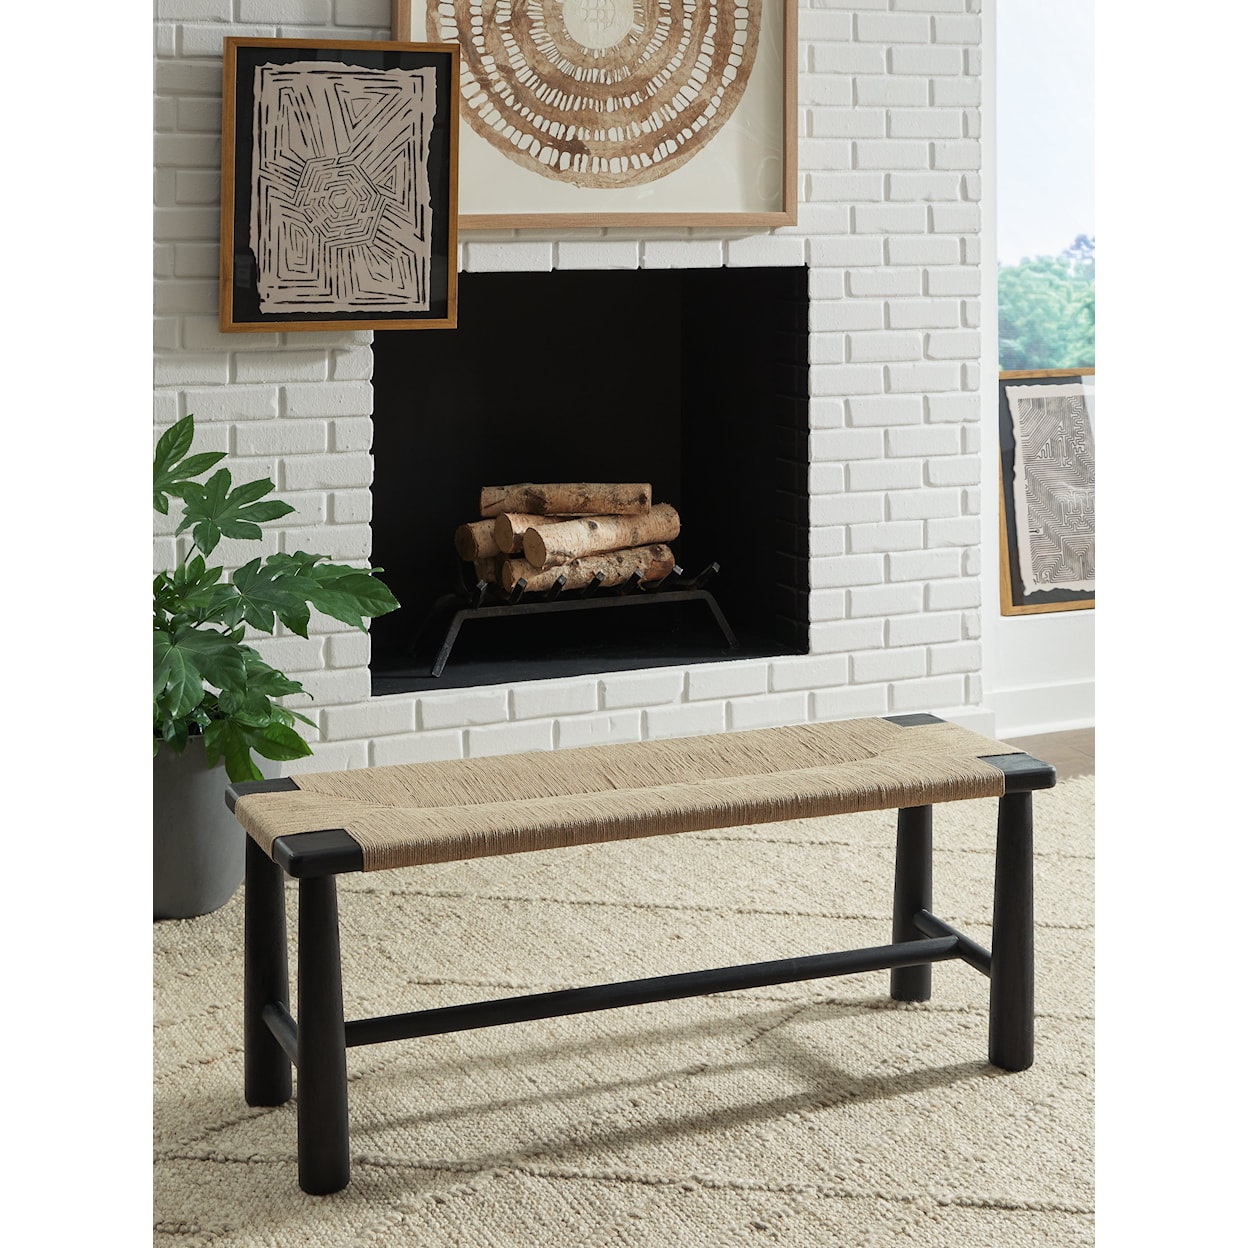 Ashley Furniture Signature Design Acerman Accent Bench